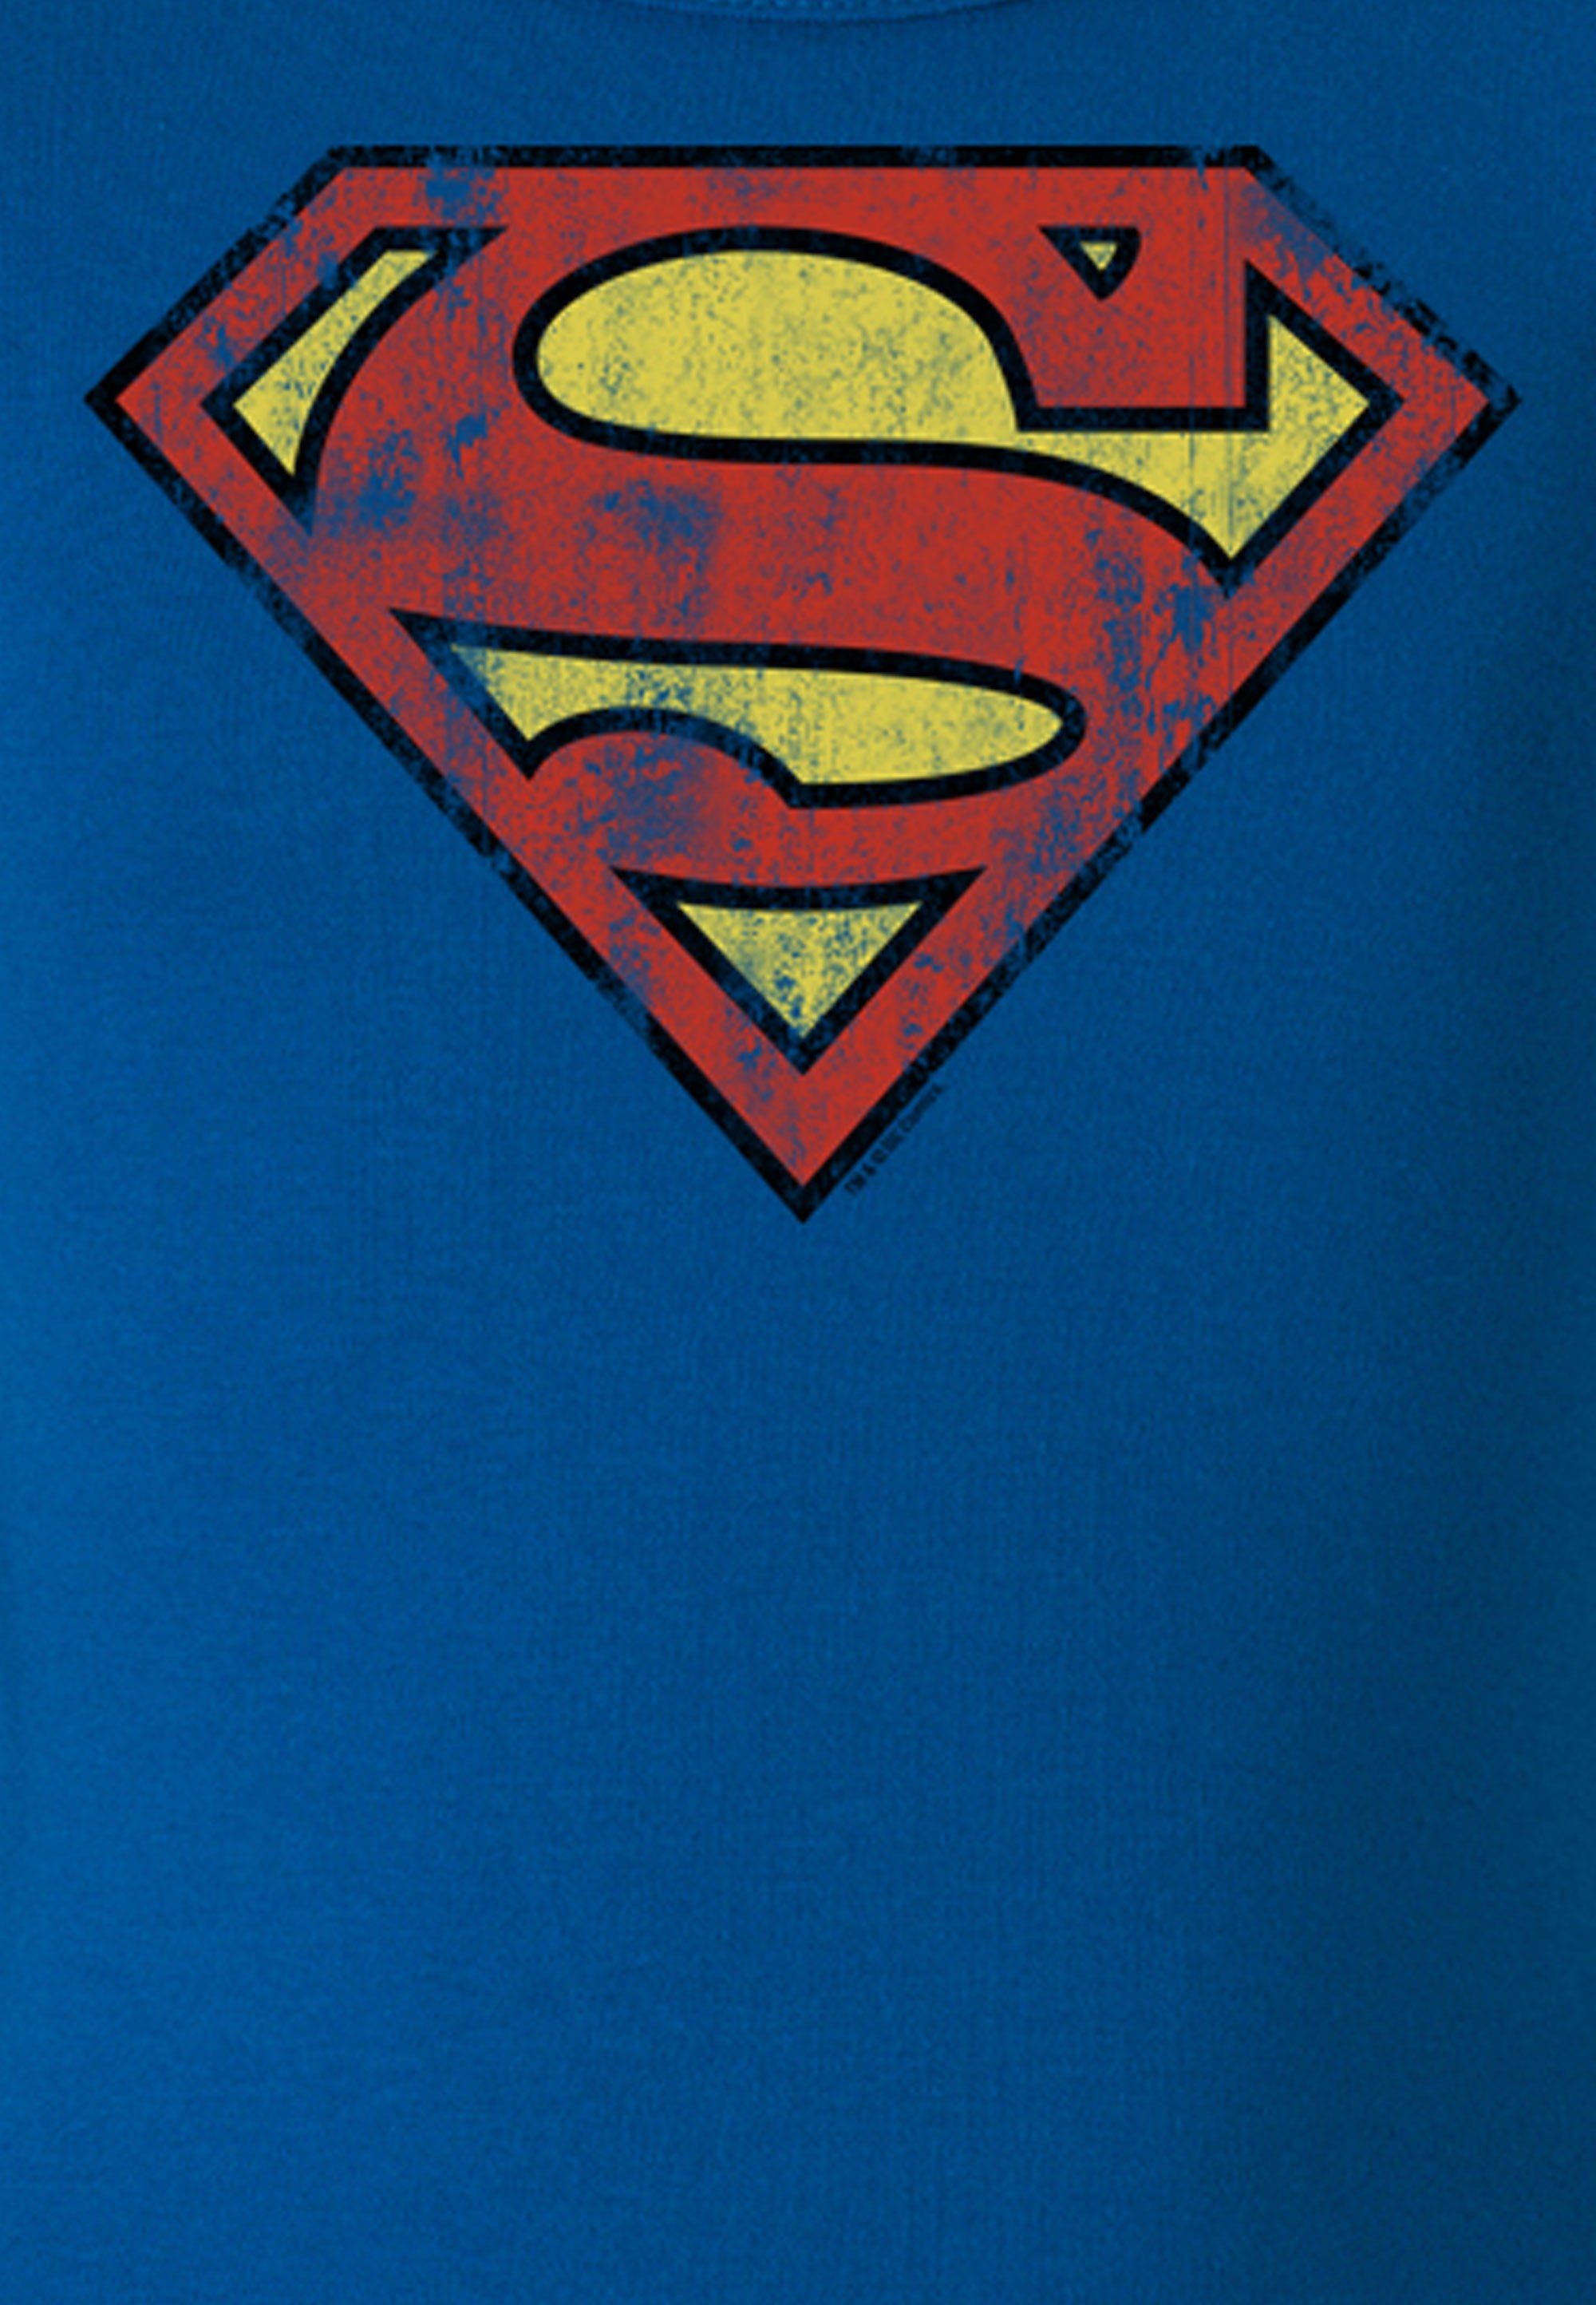 mit Superman tollem Frontprint LOGOSHIRT T-Shirt